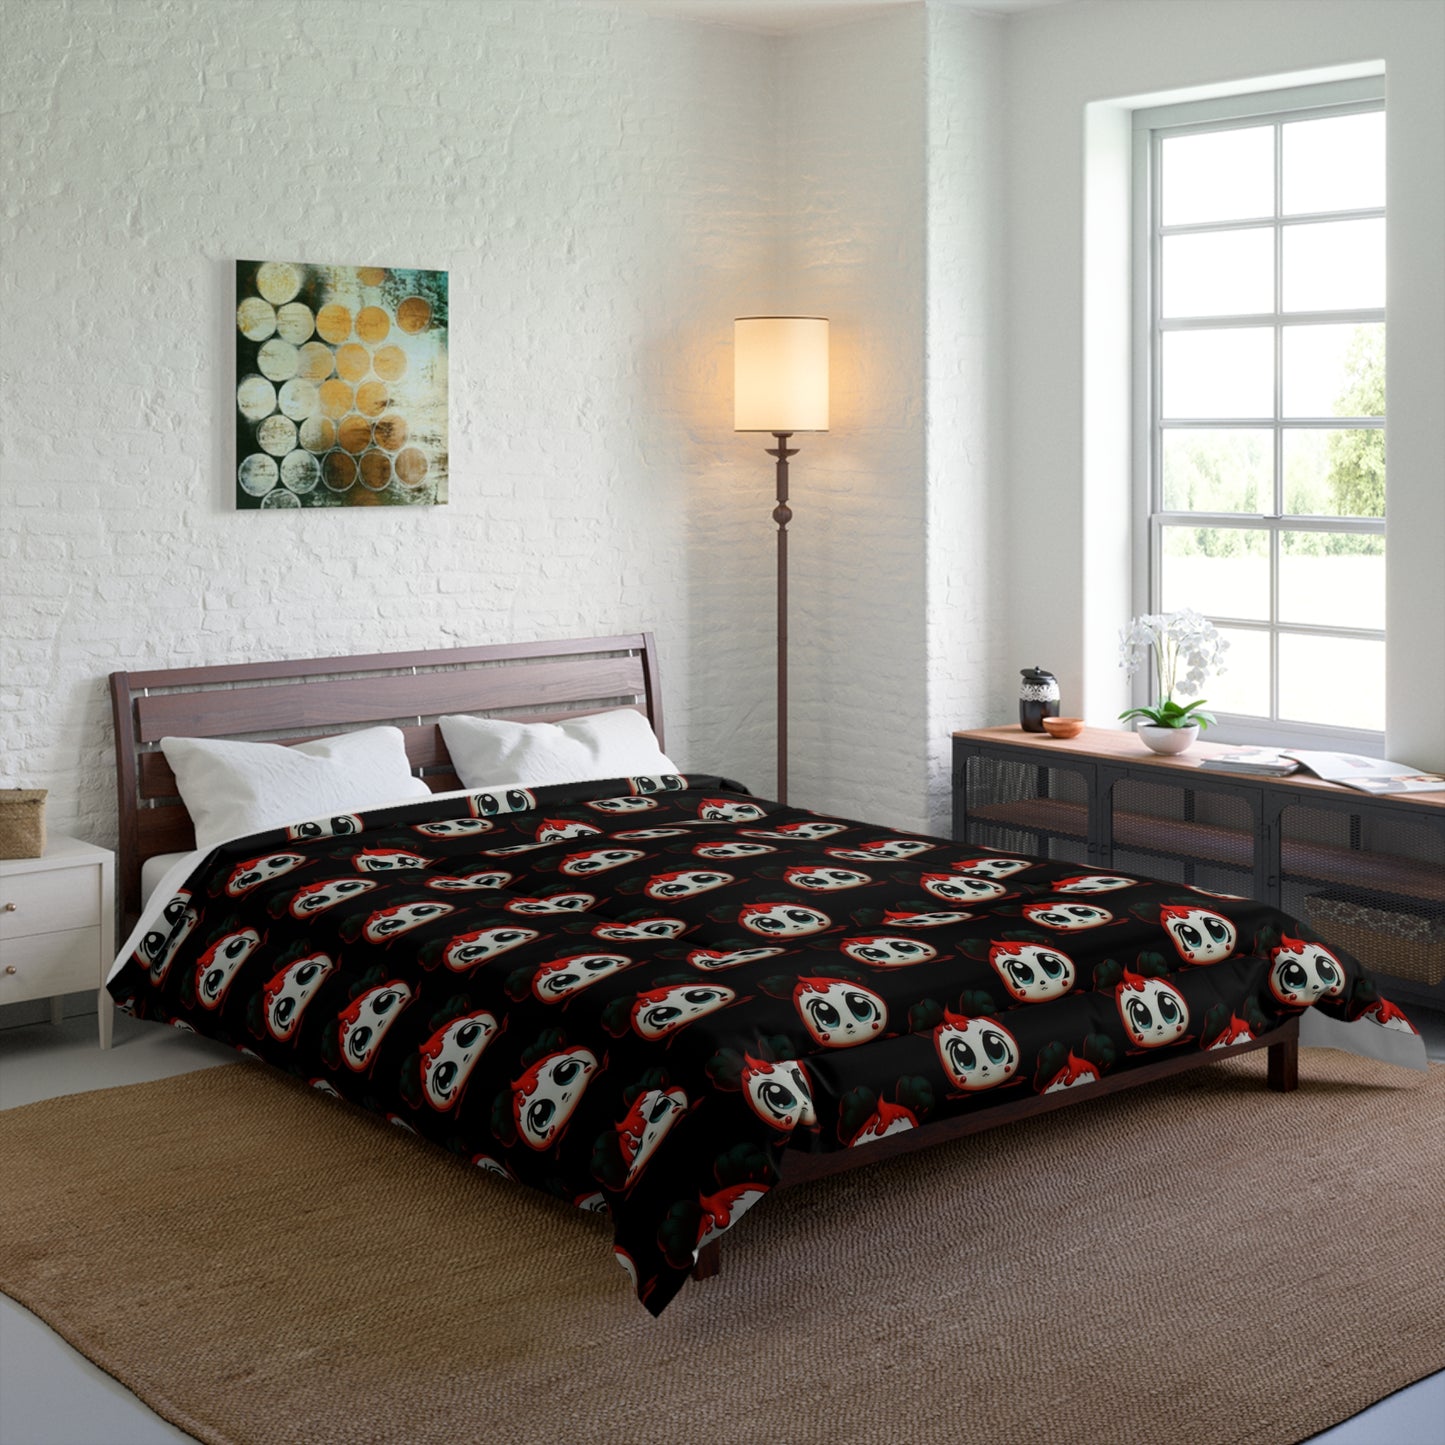 Killer Clown Dumpling Comforter - Quirky and Cozy Bedding for Unique Home Decor